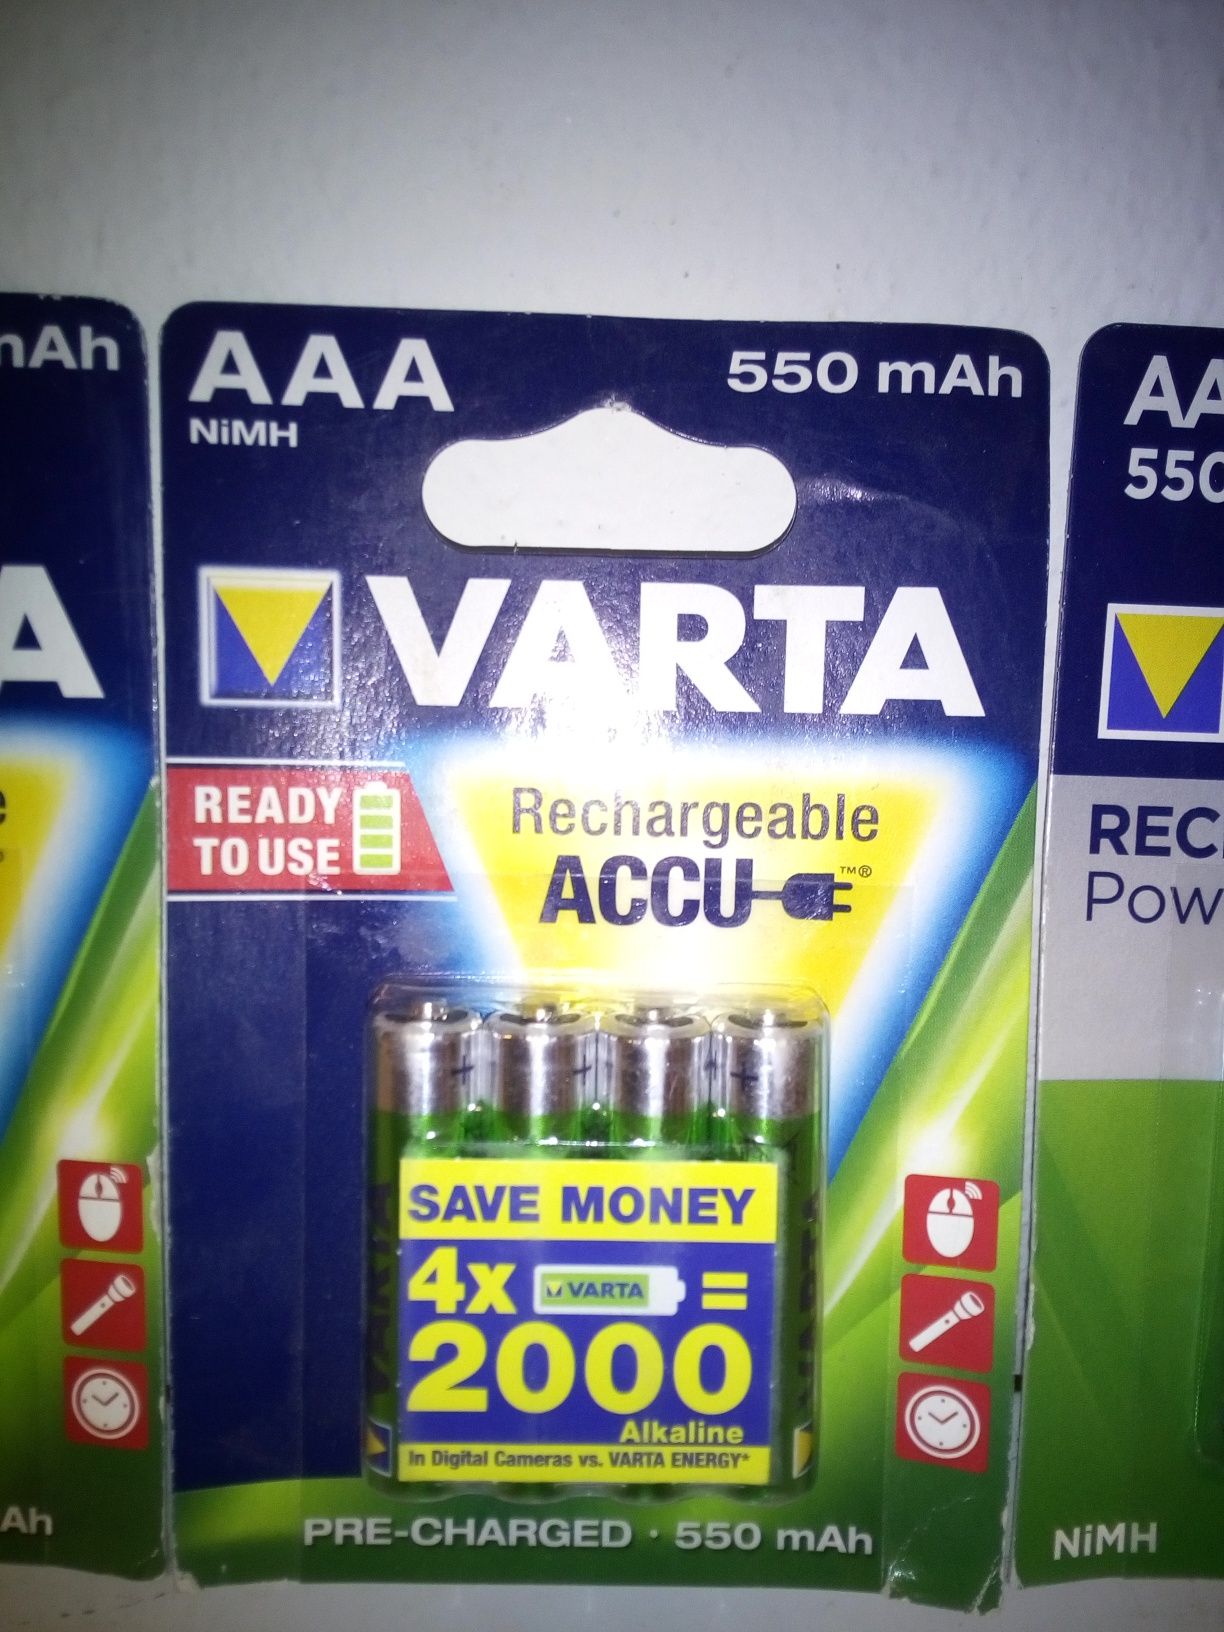 Baterie Akumulatory Varta AAA 550 mAh orginalne cena za szt. Wyprzedaż